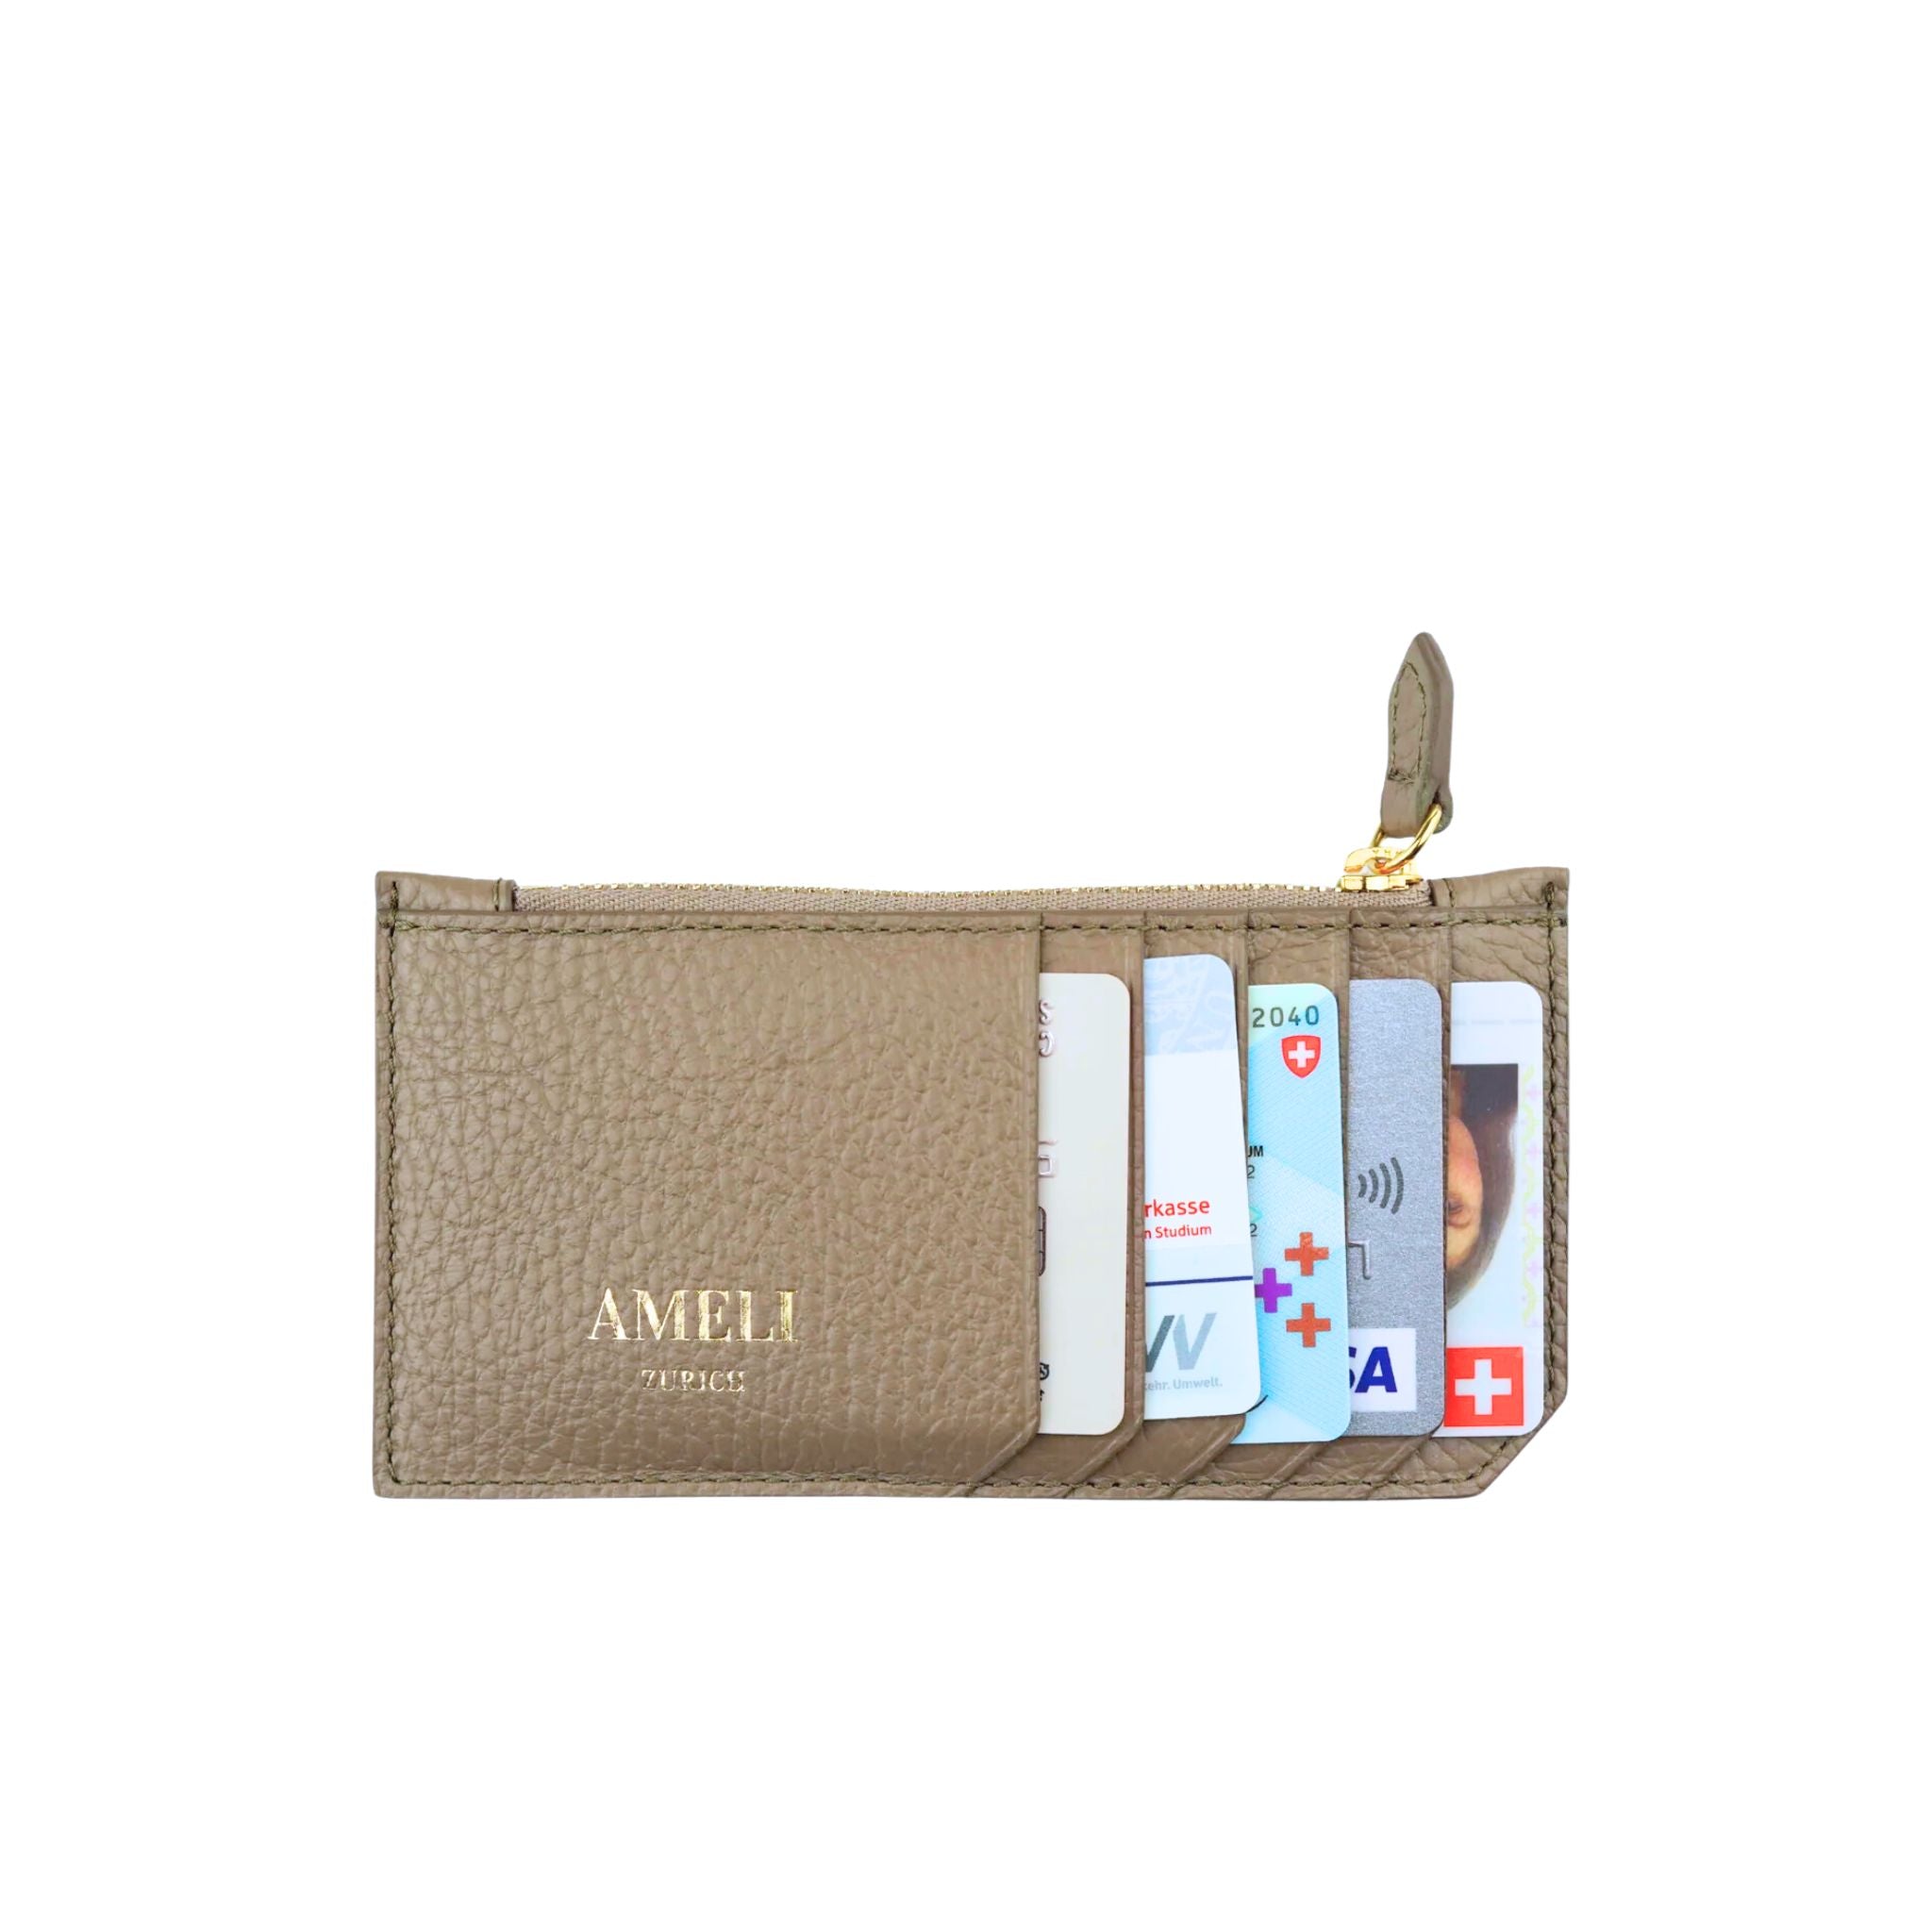 AMELI Zurich | Cardholder | Greige | Front